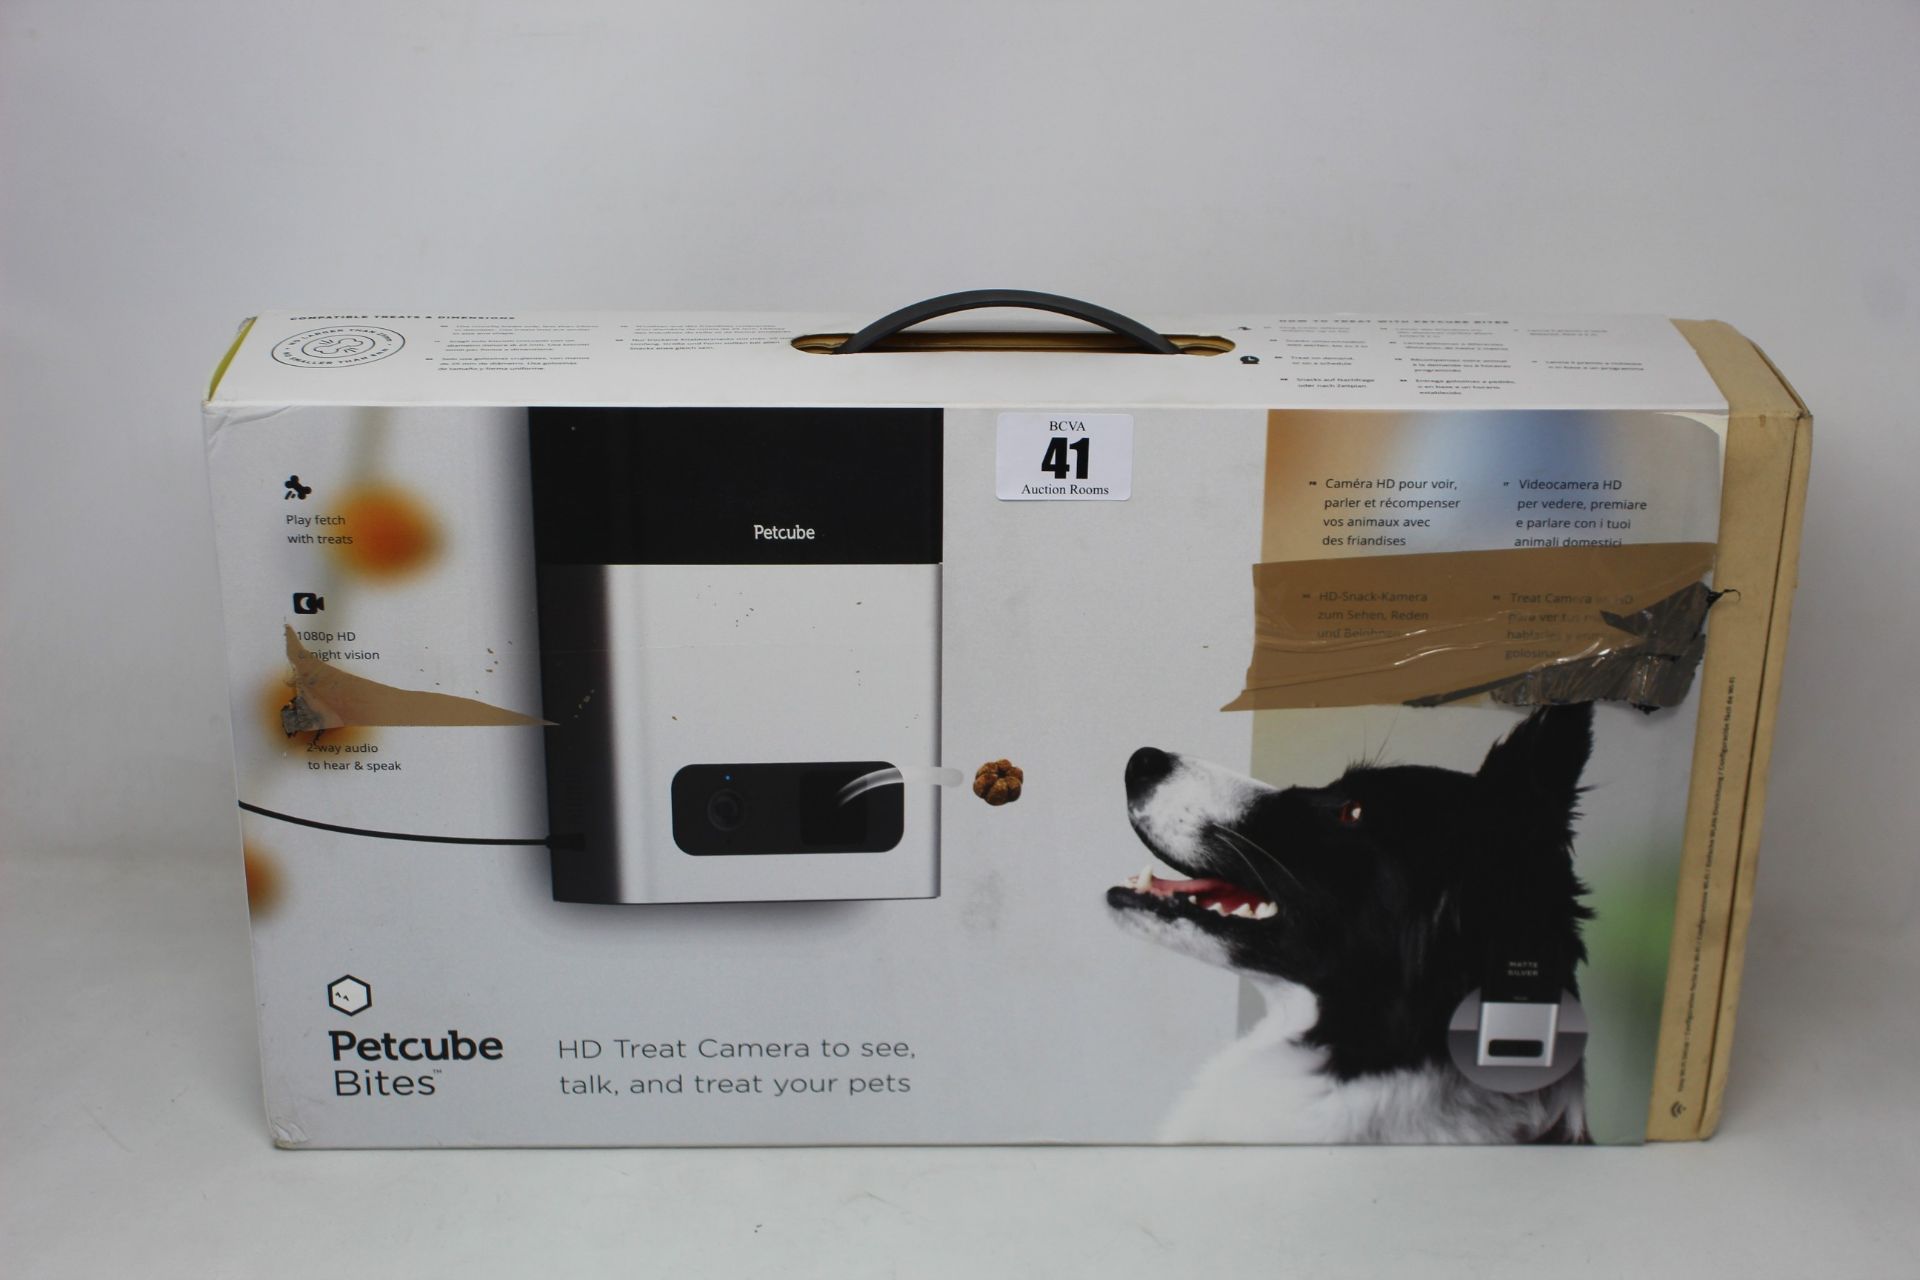 A Petcube Bite HD treat camera for pets.